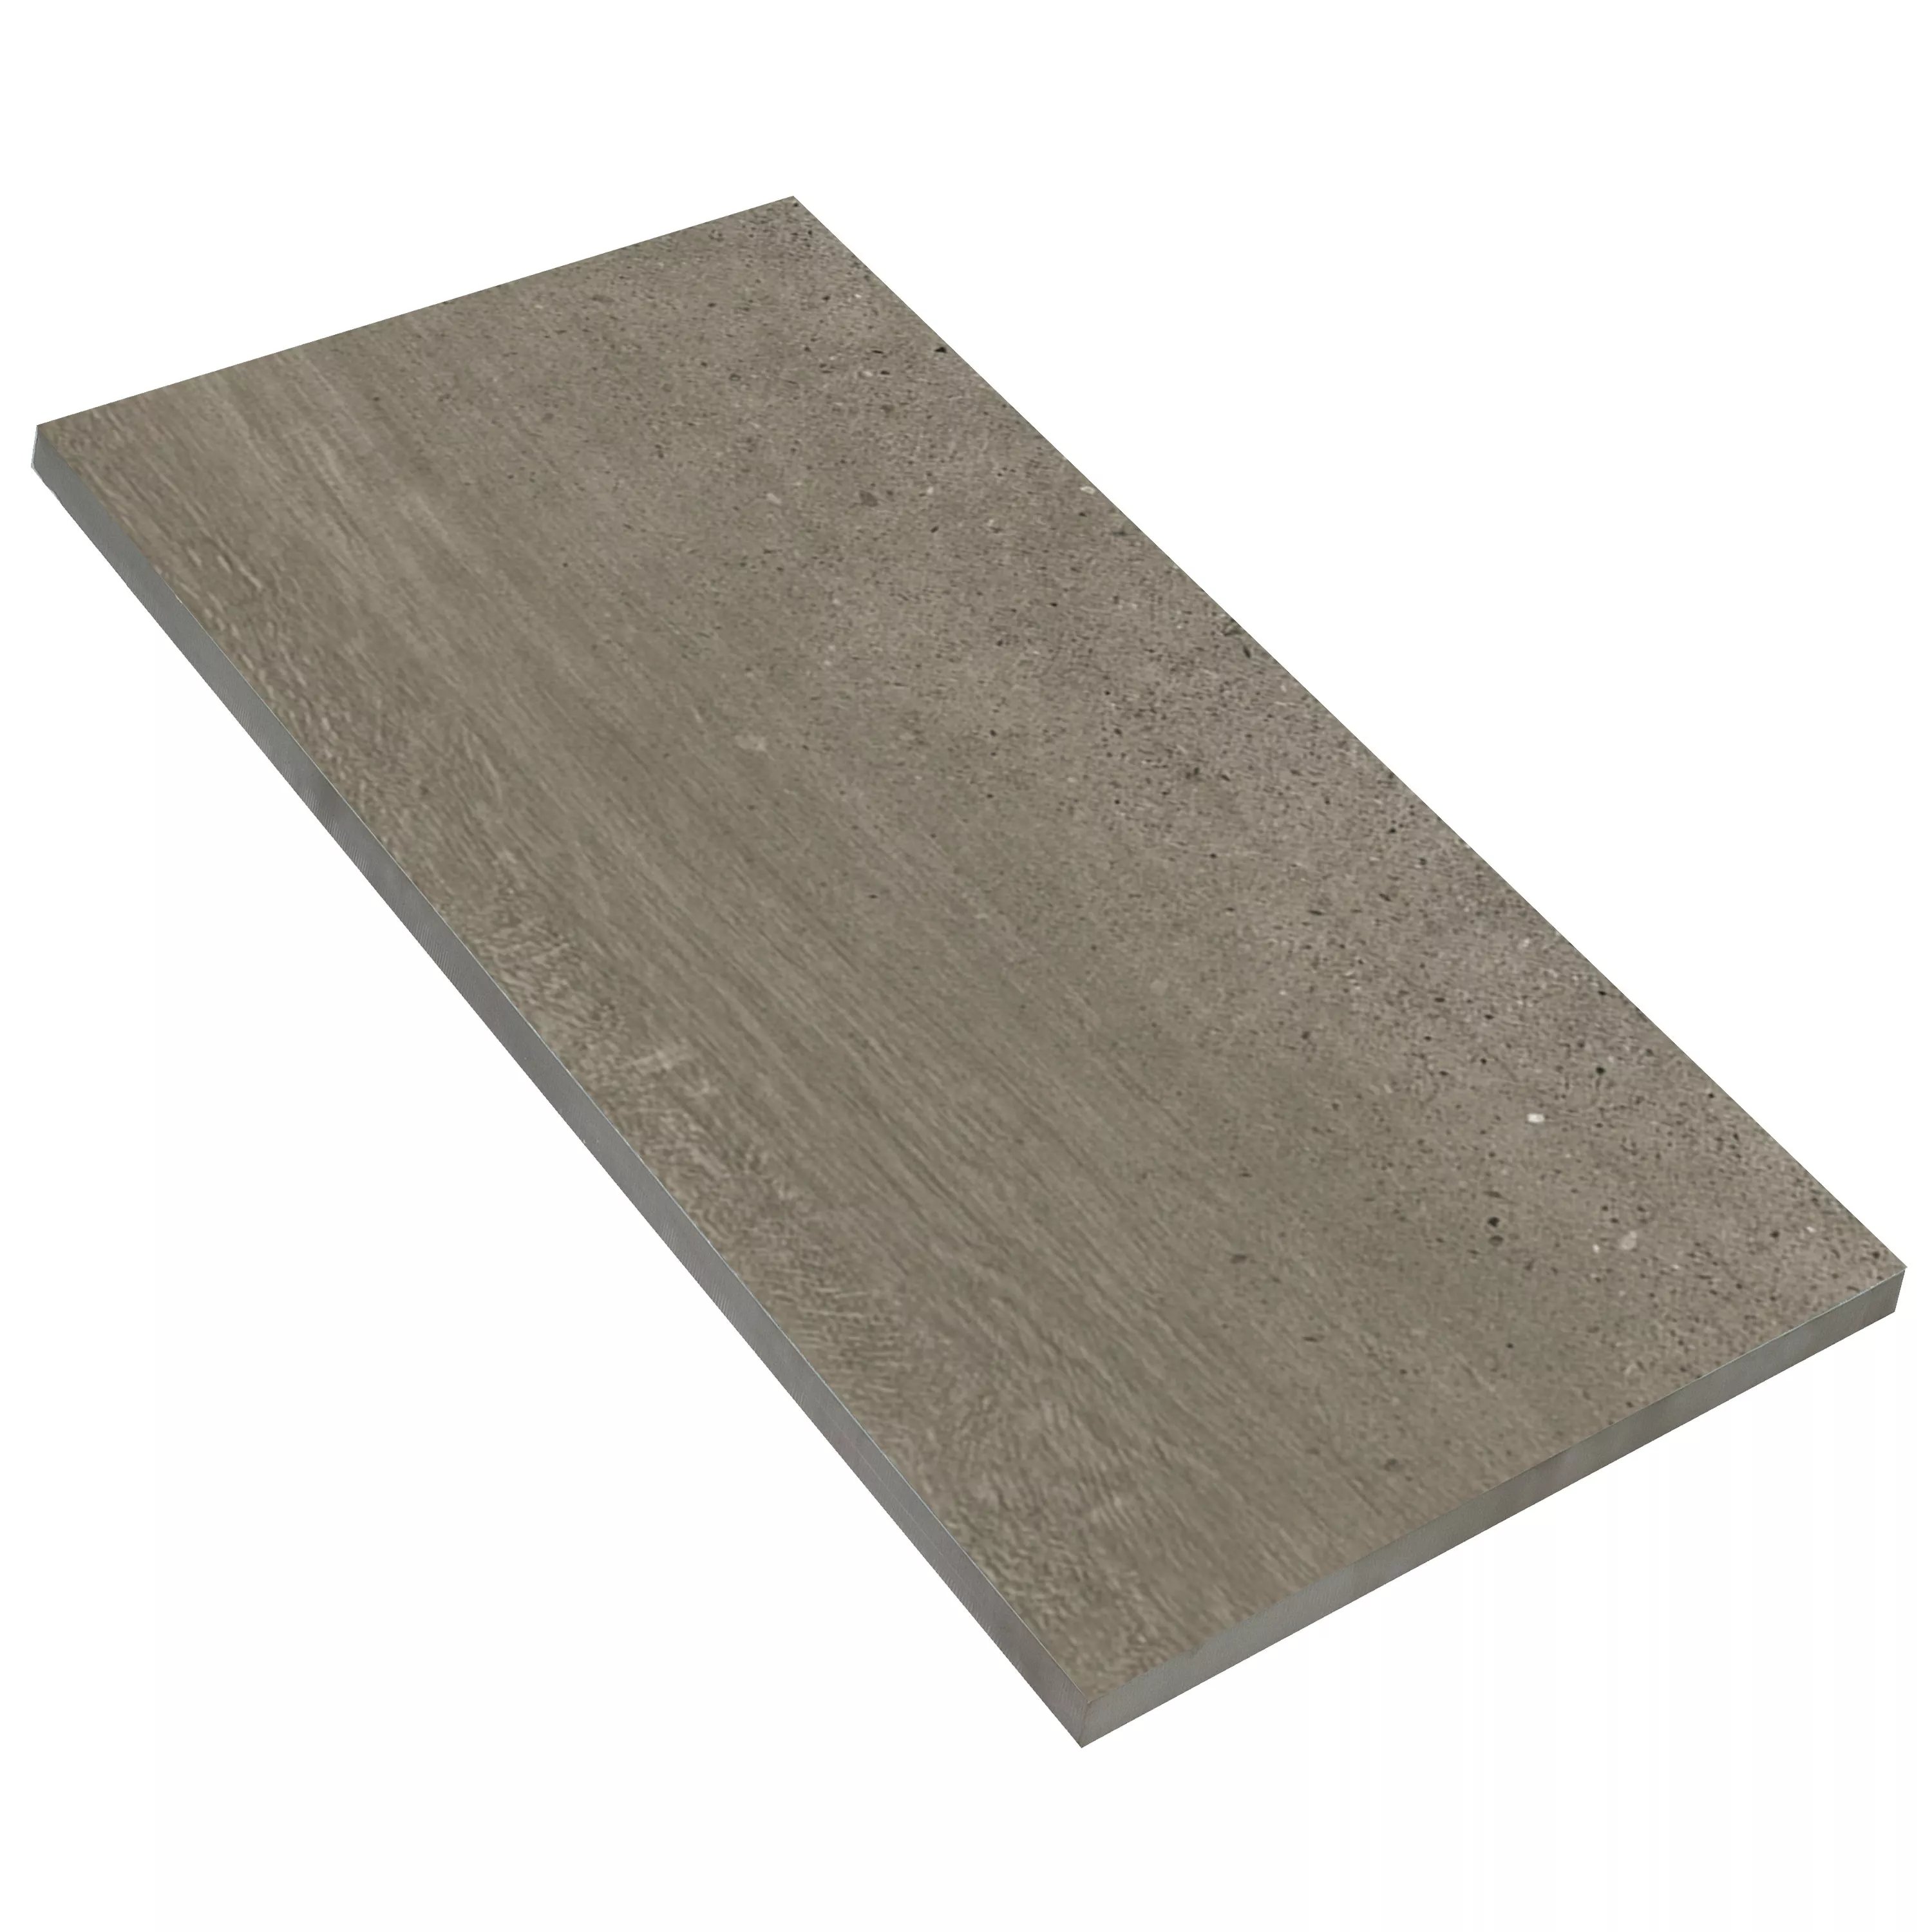 Floor Tiles Darazo Wood Optic 30x60cm Brown